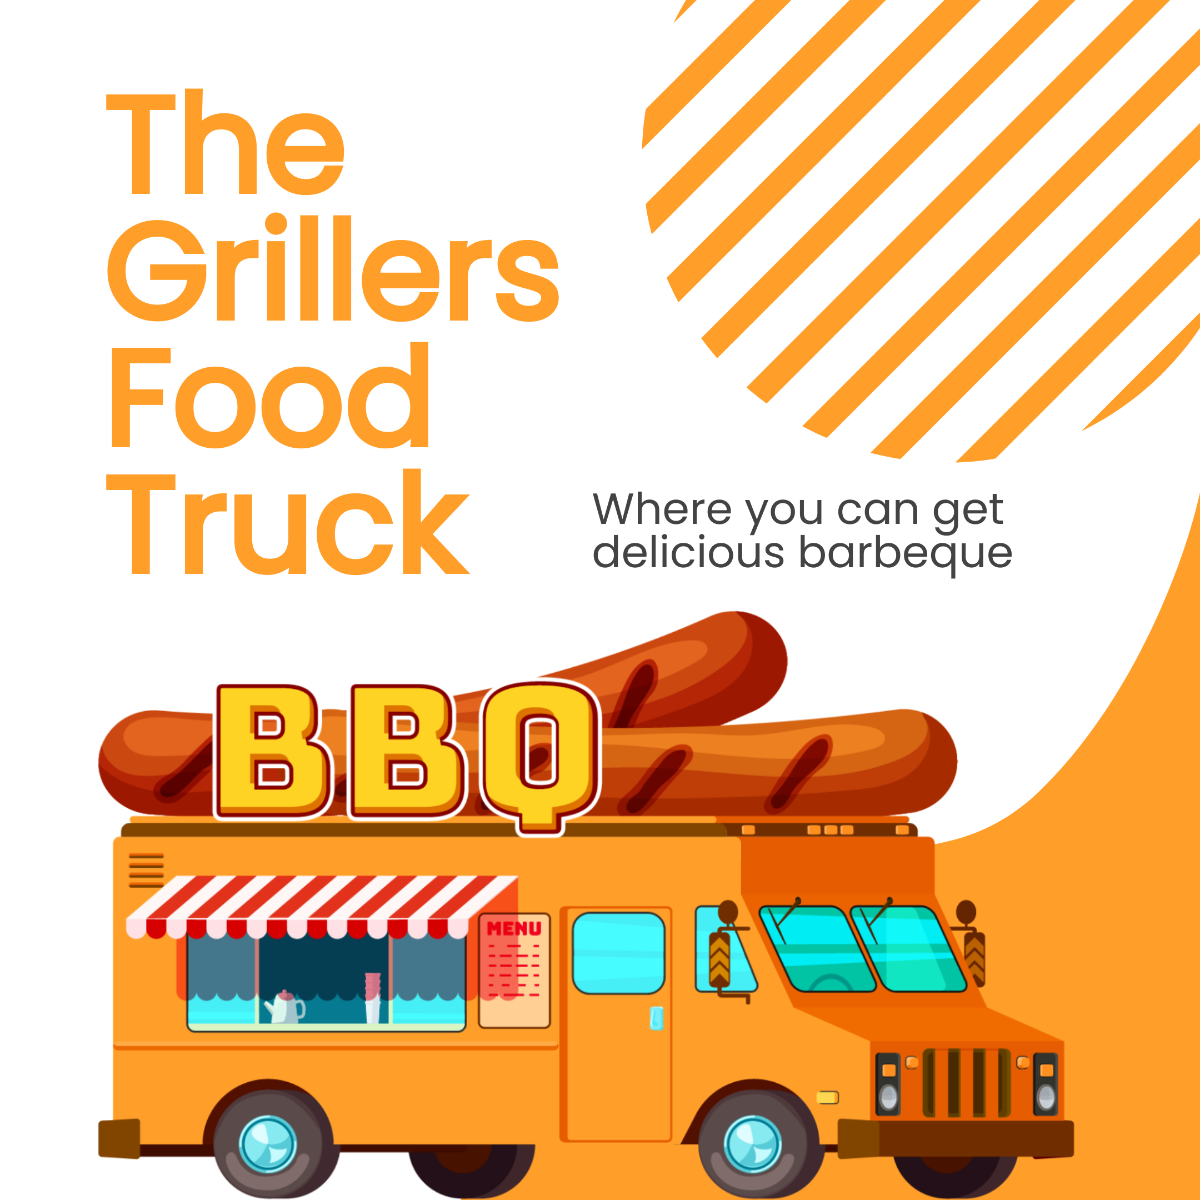 Free Bbq Food Truck Instagram Post Template